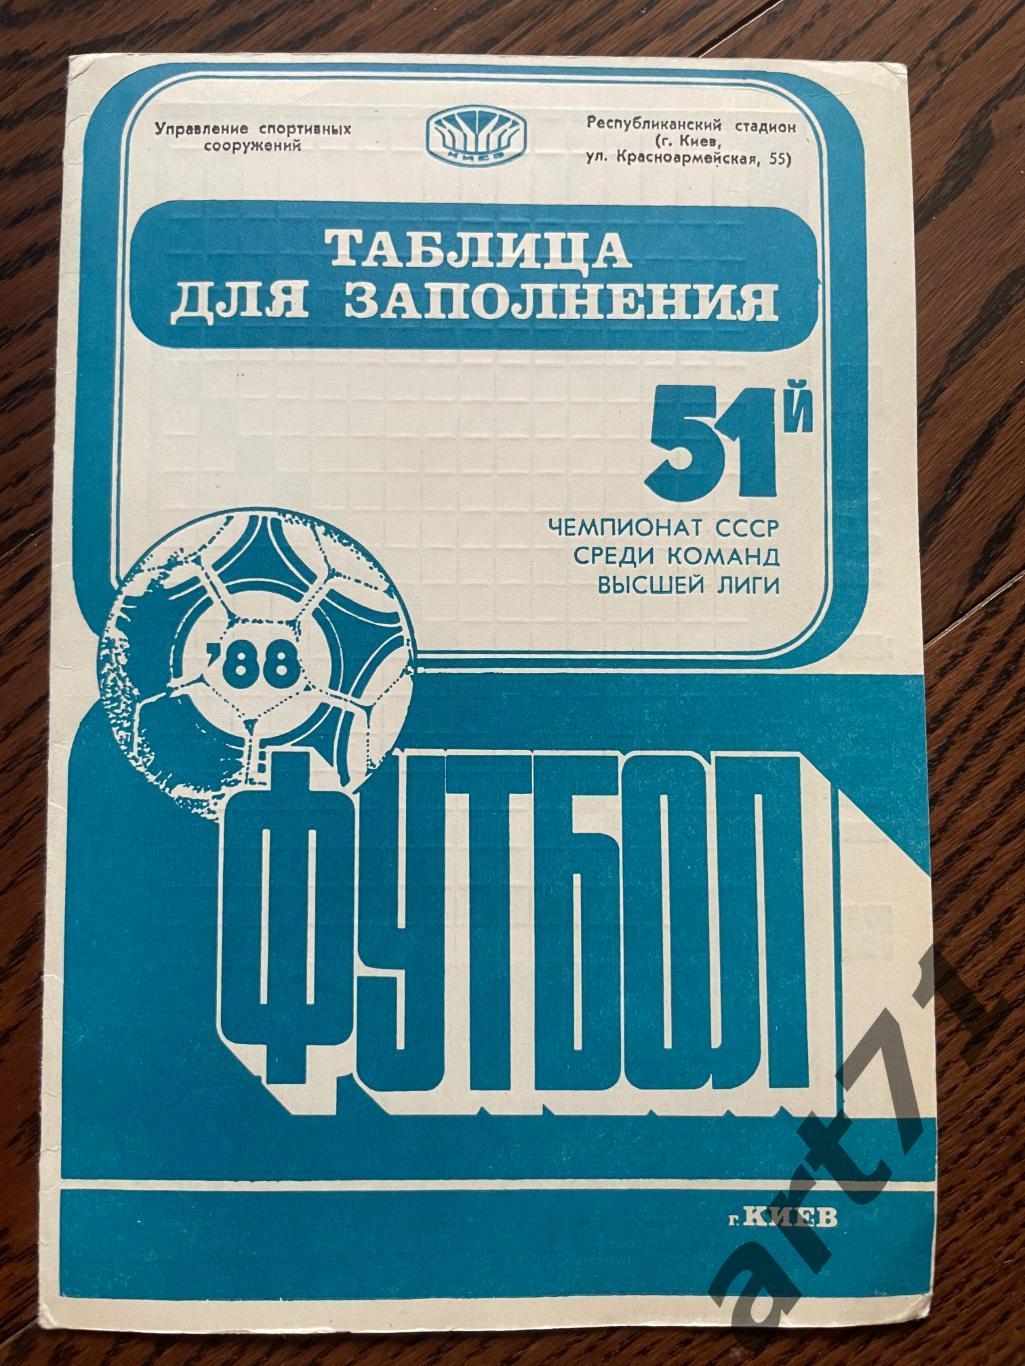 Киев 1988. Таблицы, календарь игр